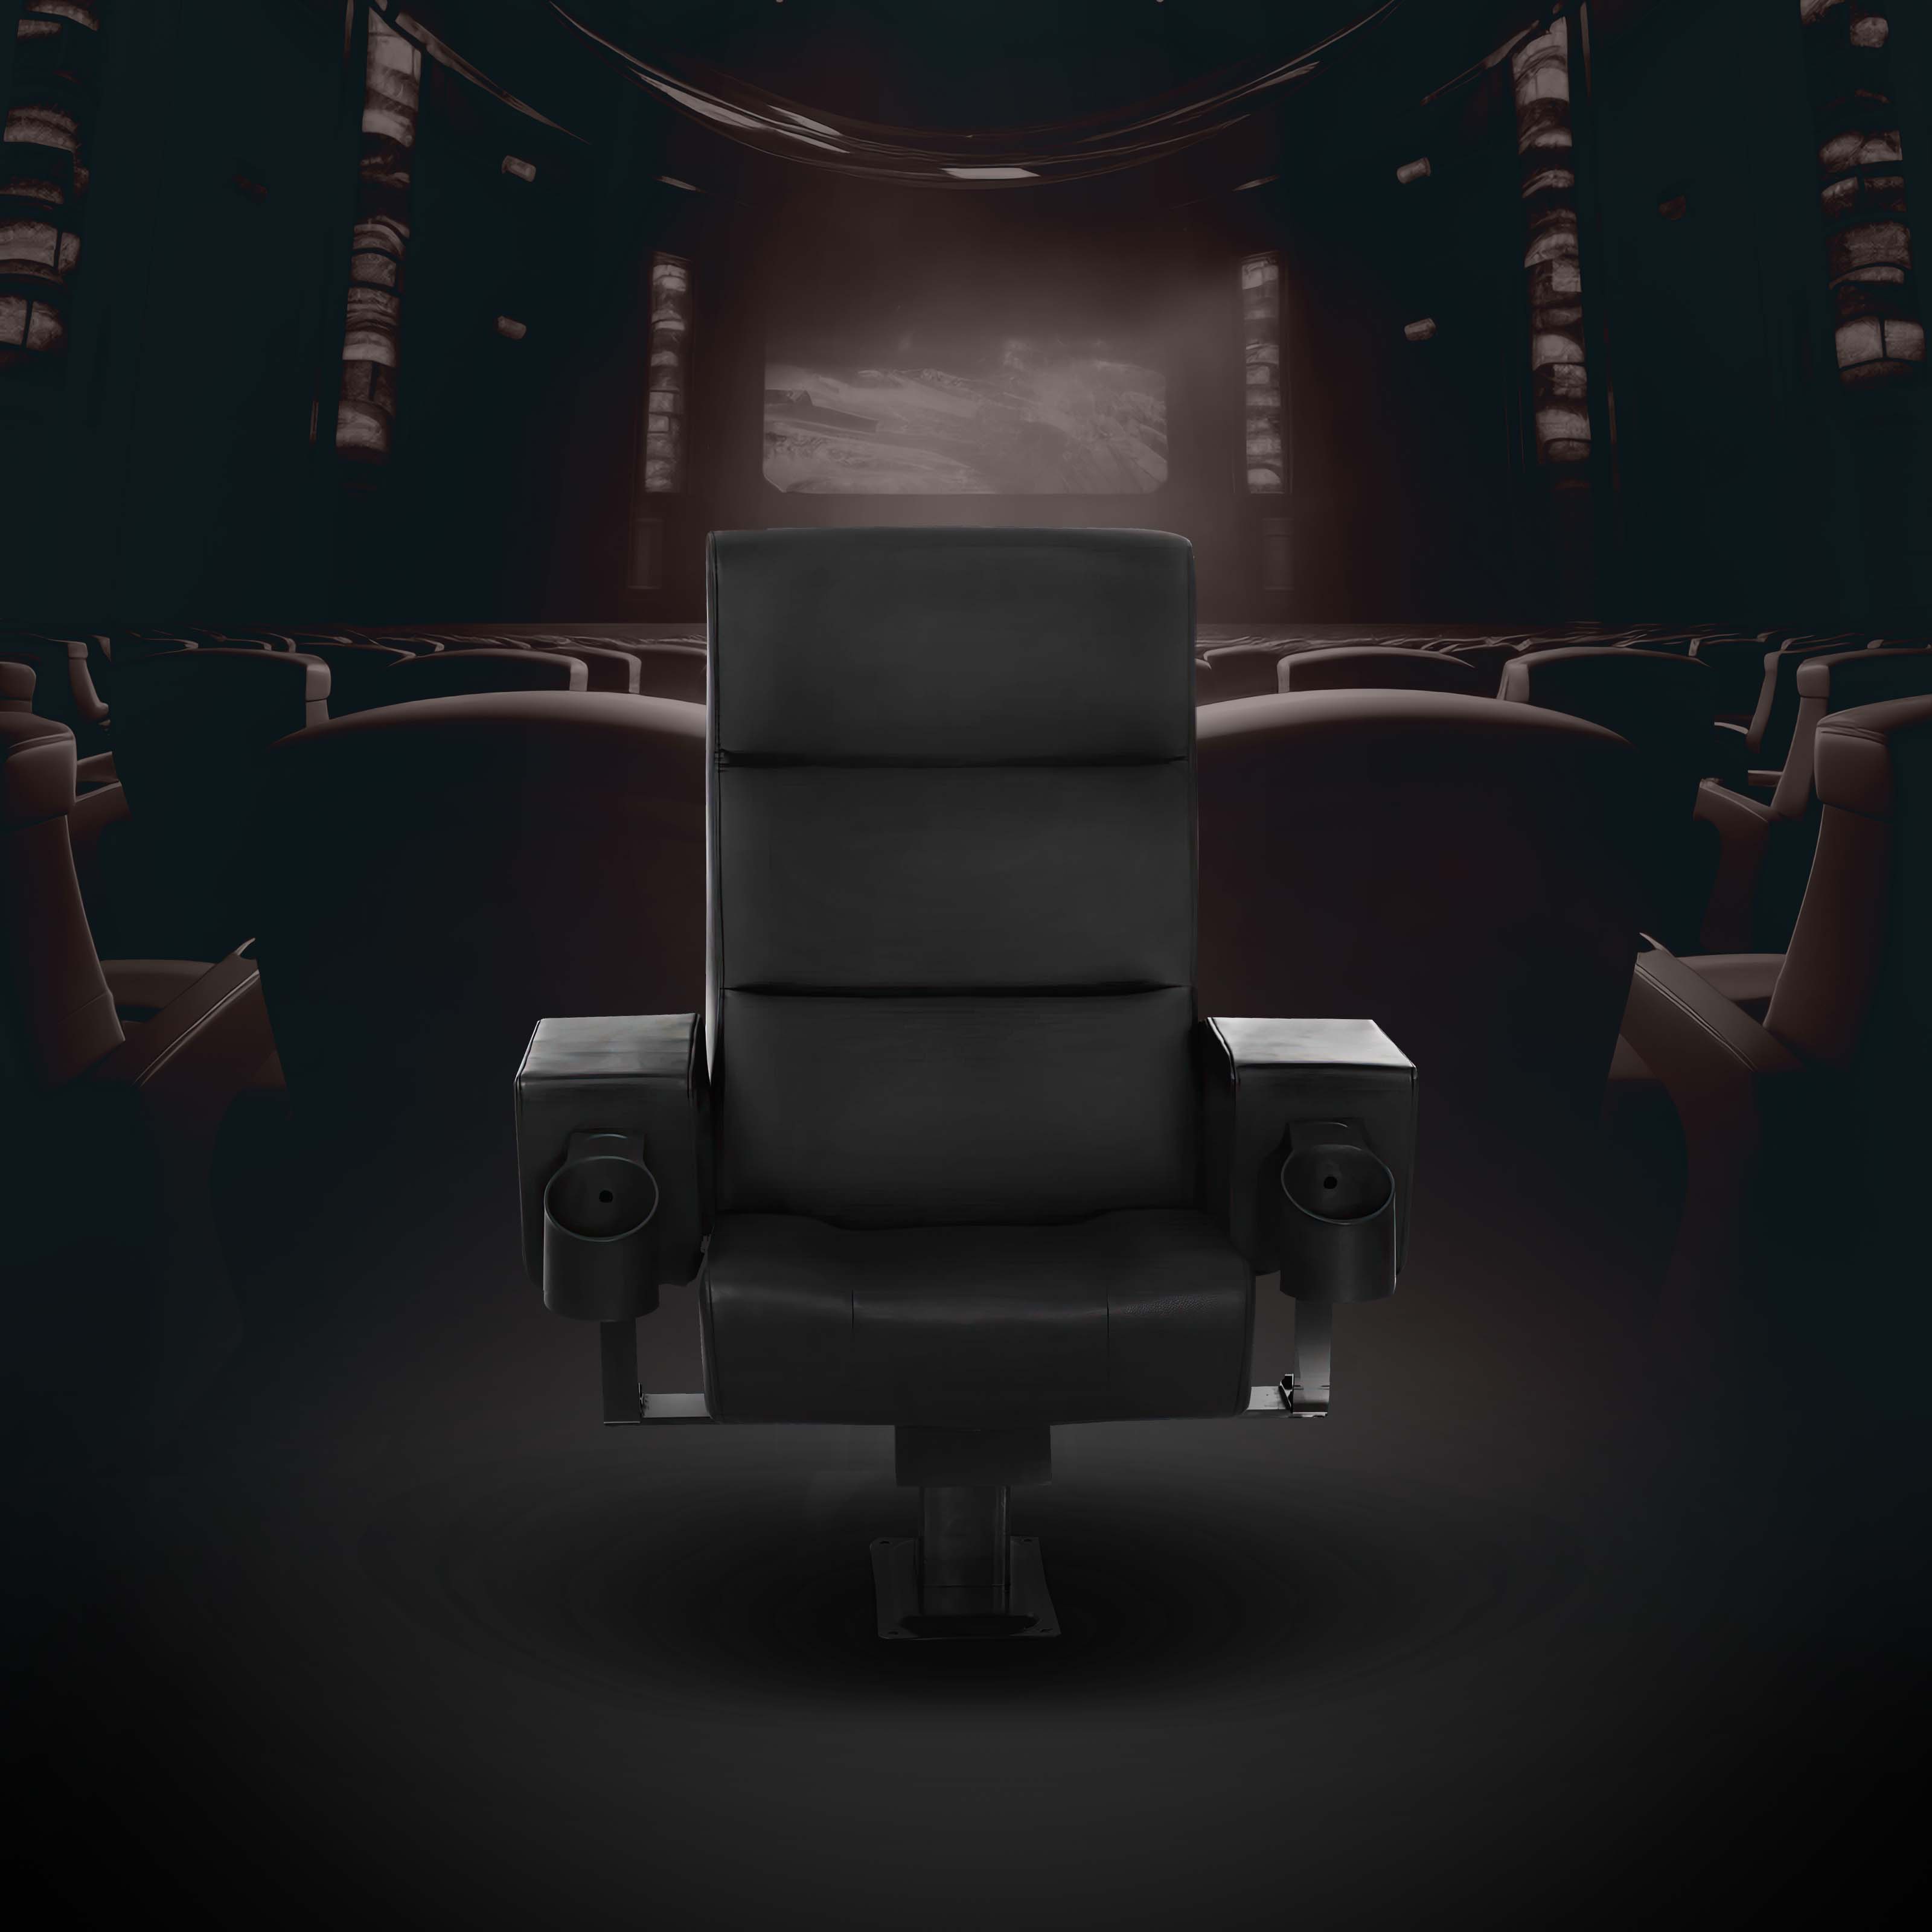 Cinema Seats Image